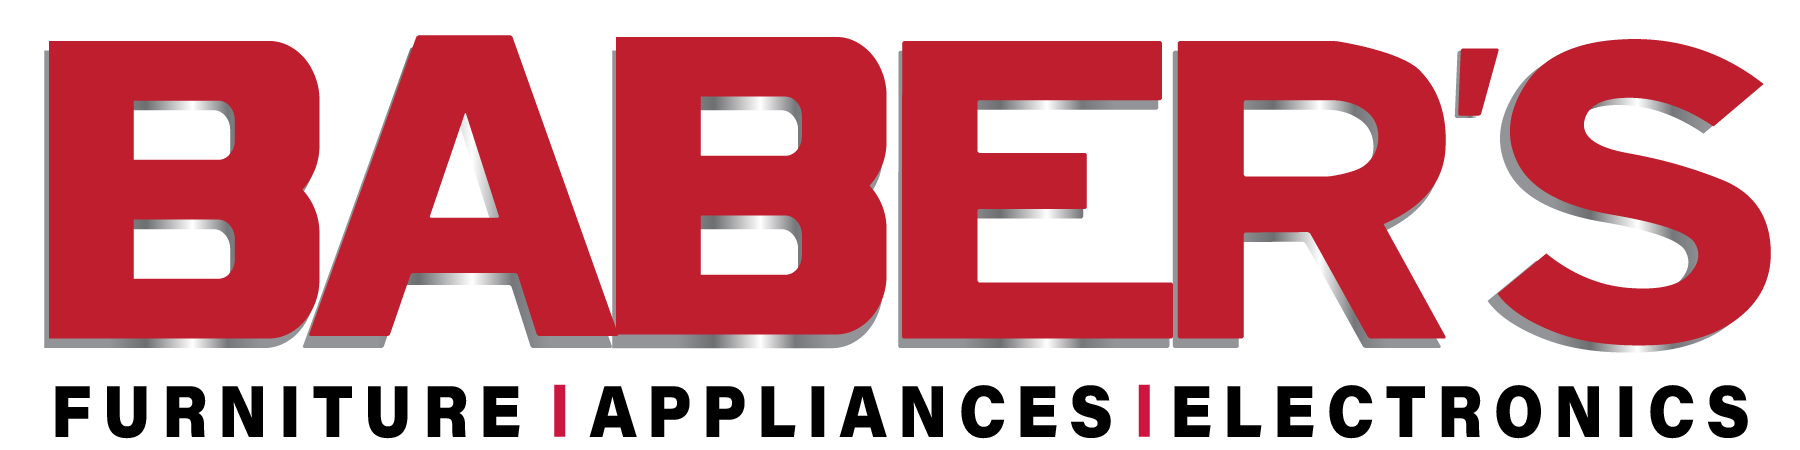 Baber's | Appliances, Electronics, Furniture